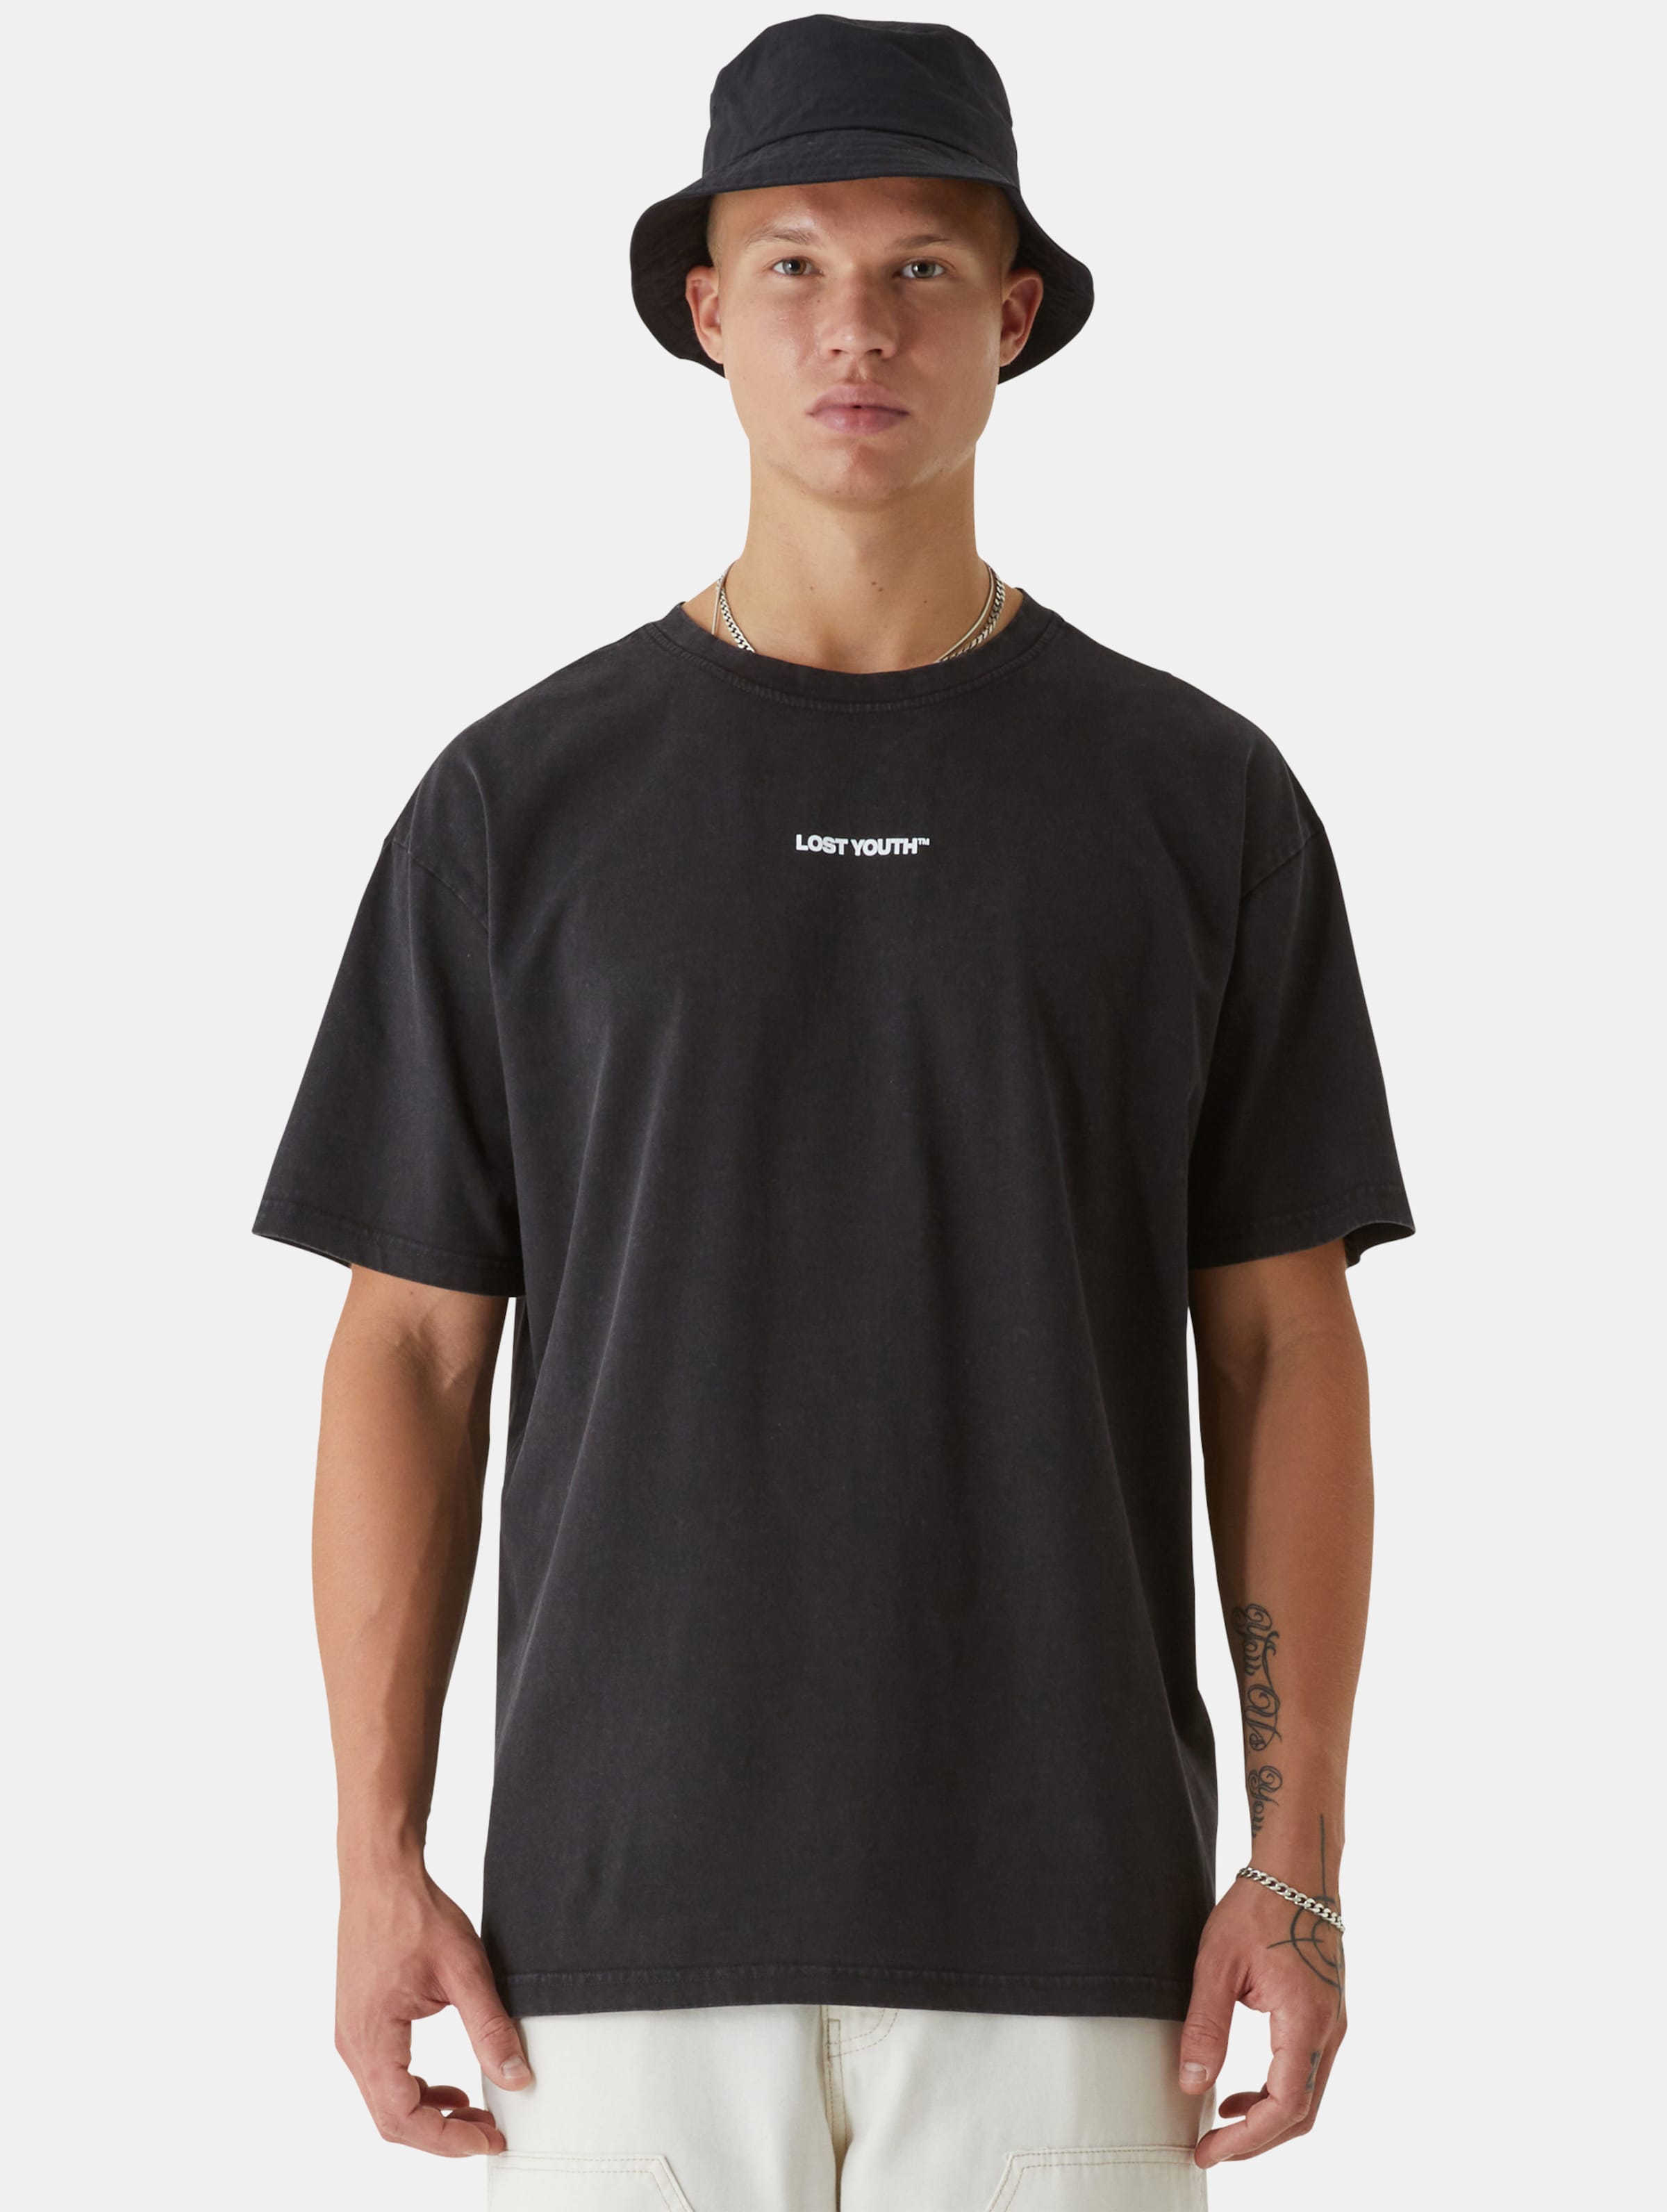 Lost Youth SKATE ACID WASHED T-Shirt Männer,Unisex op kleur zwart, Maat XXL